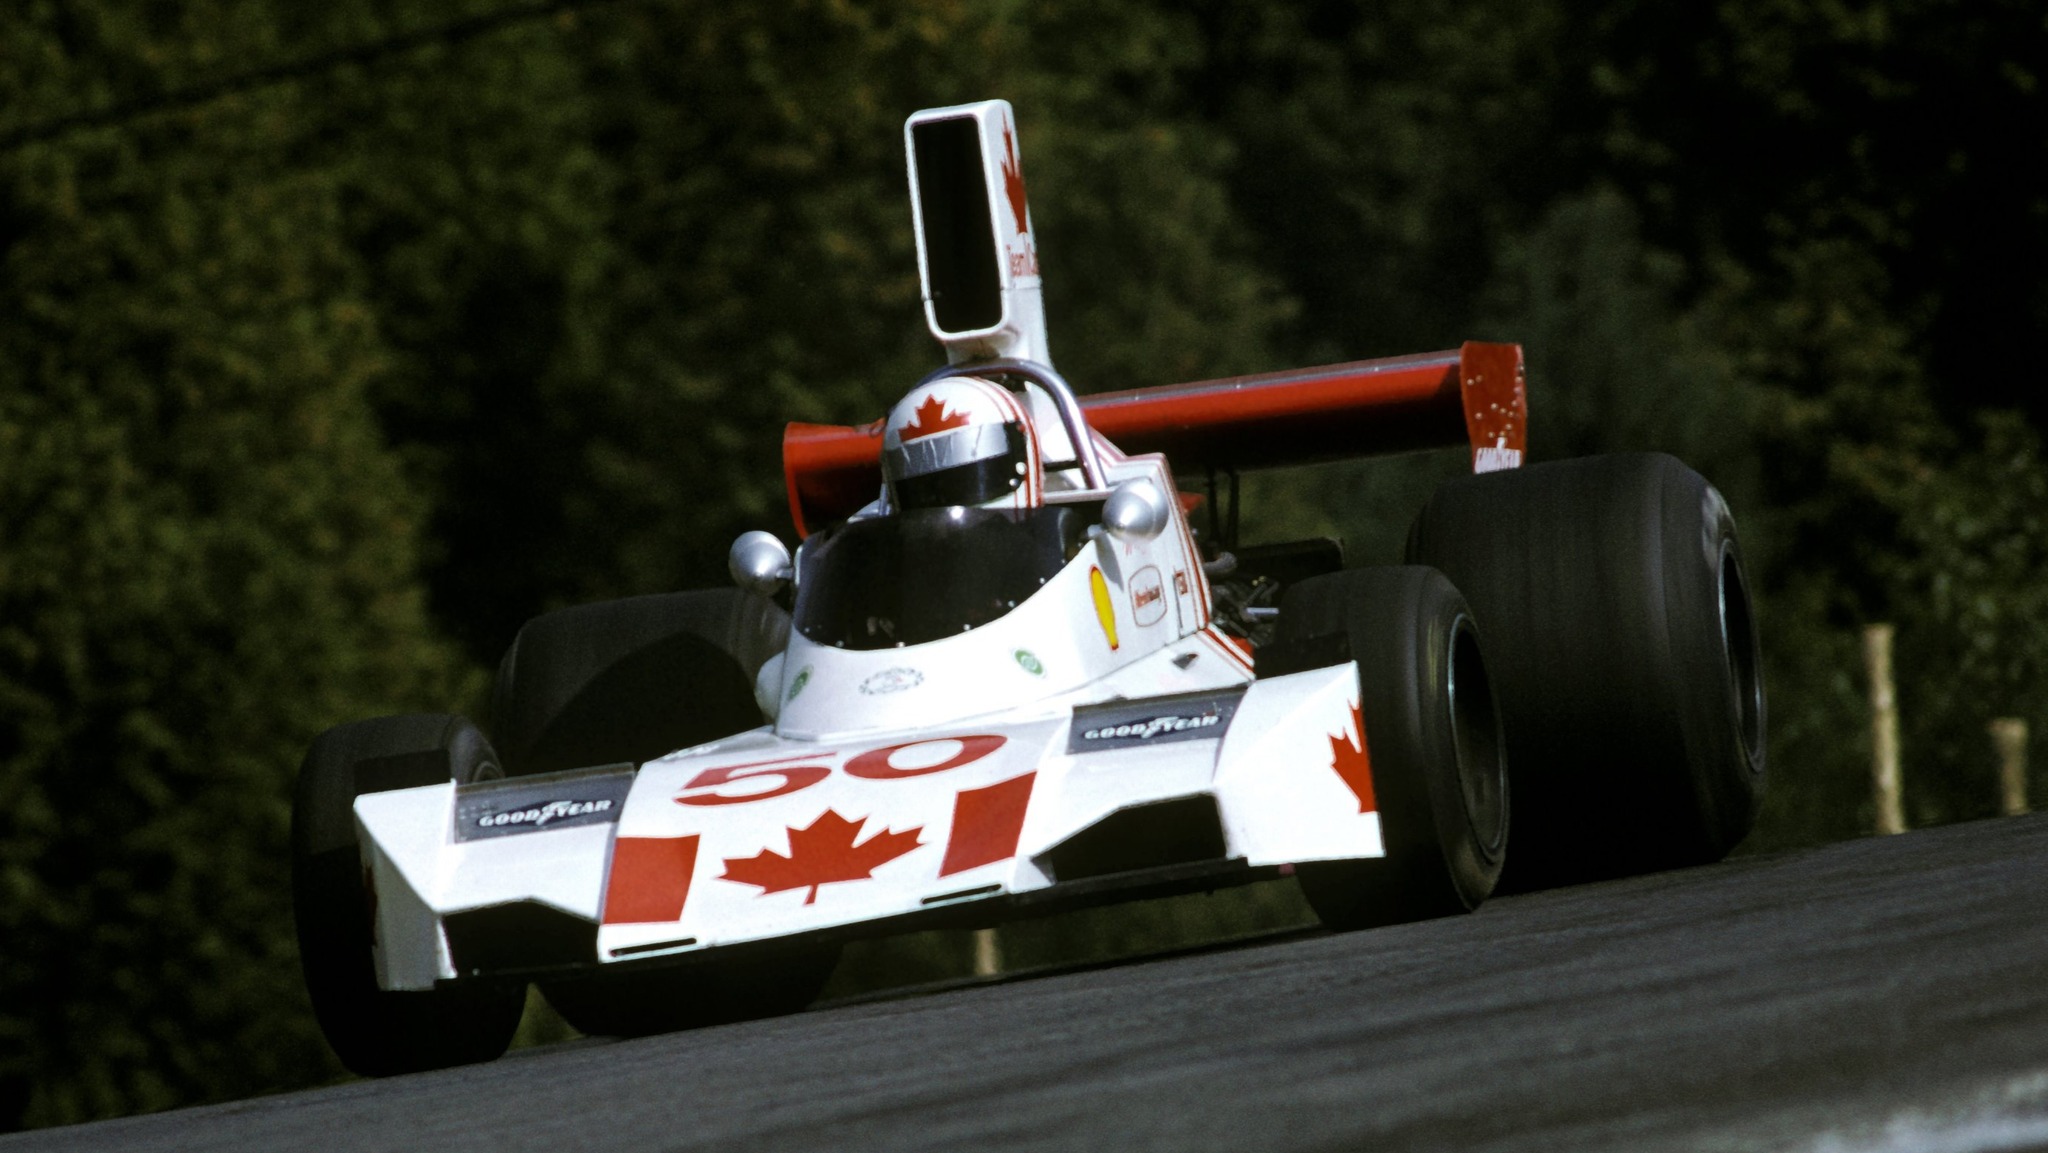 A Brabham BT42 of the Team Canada in the 1974 F1 season.